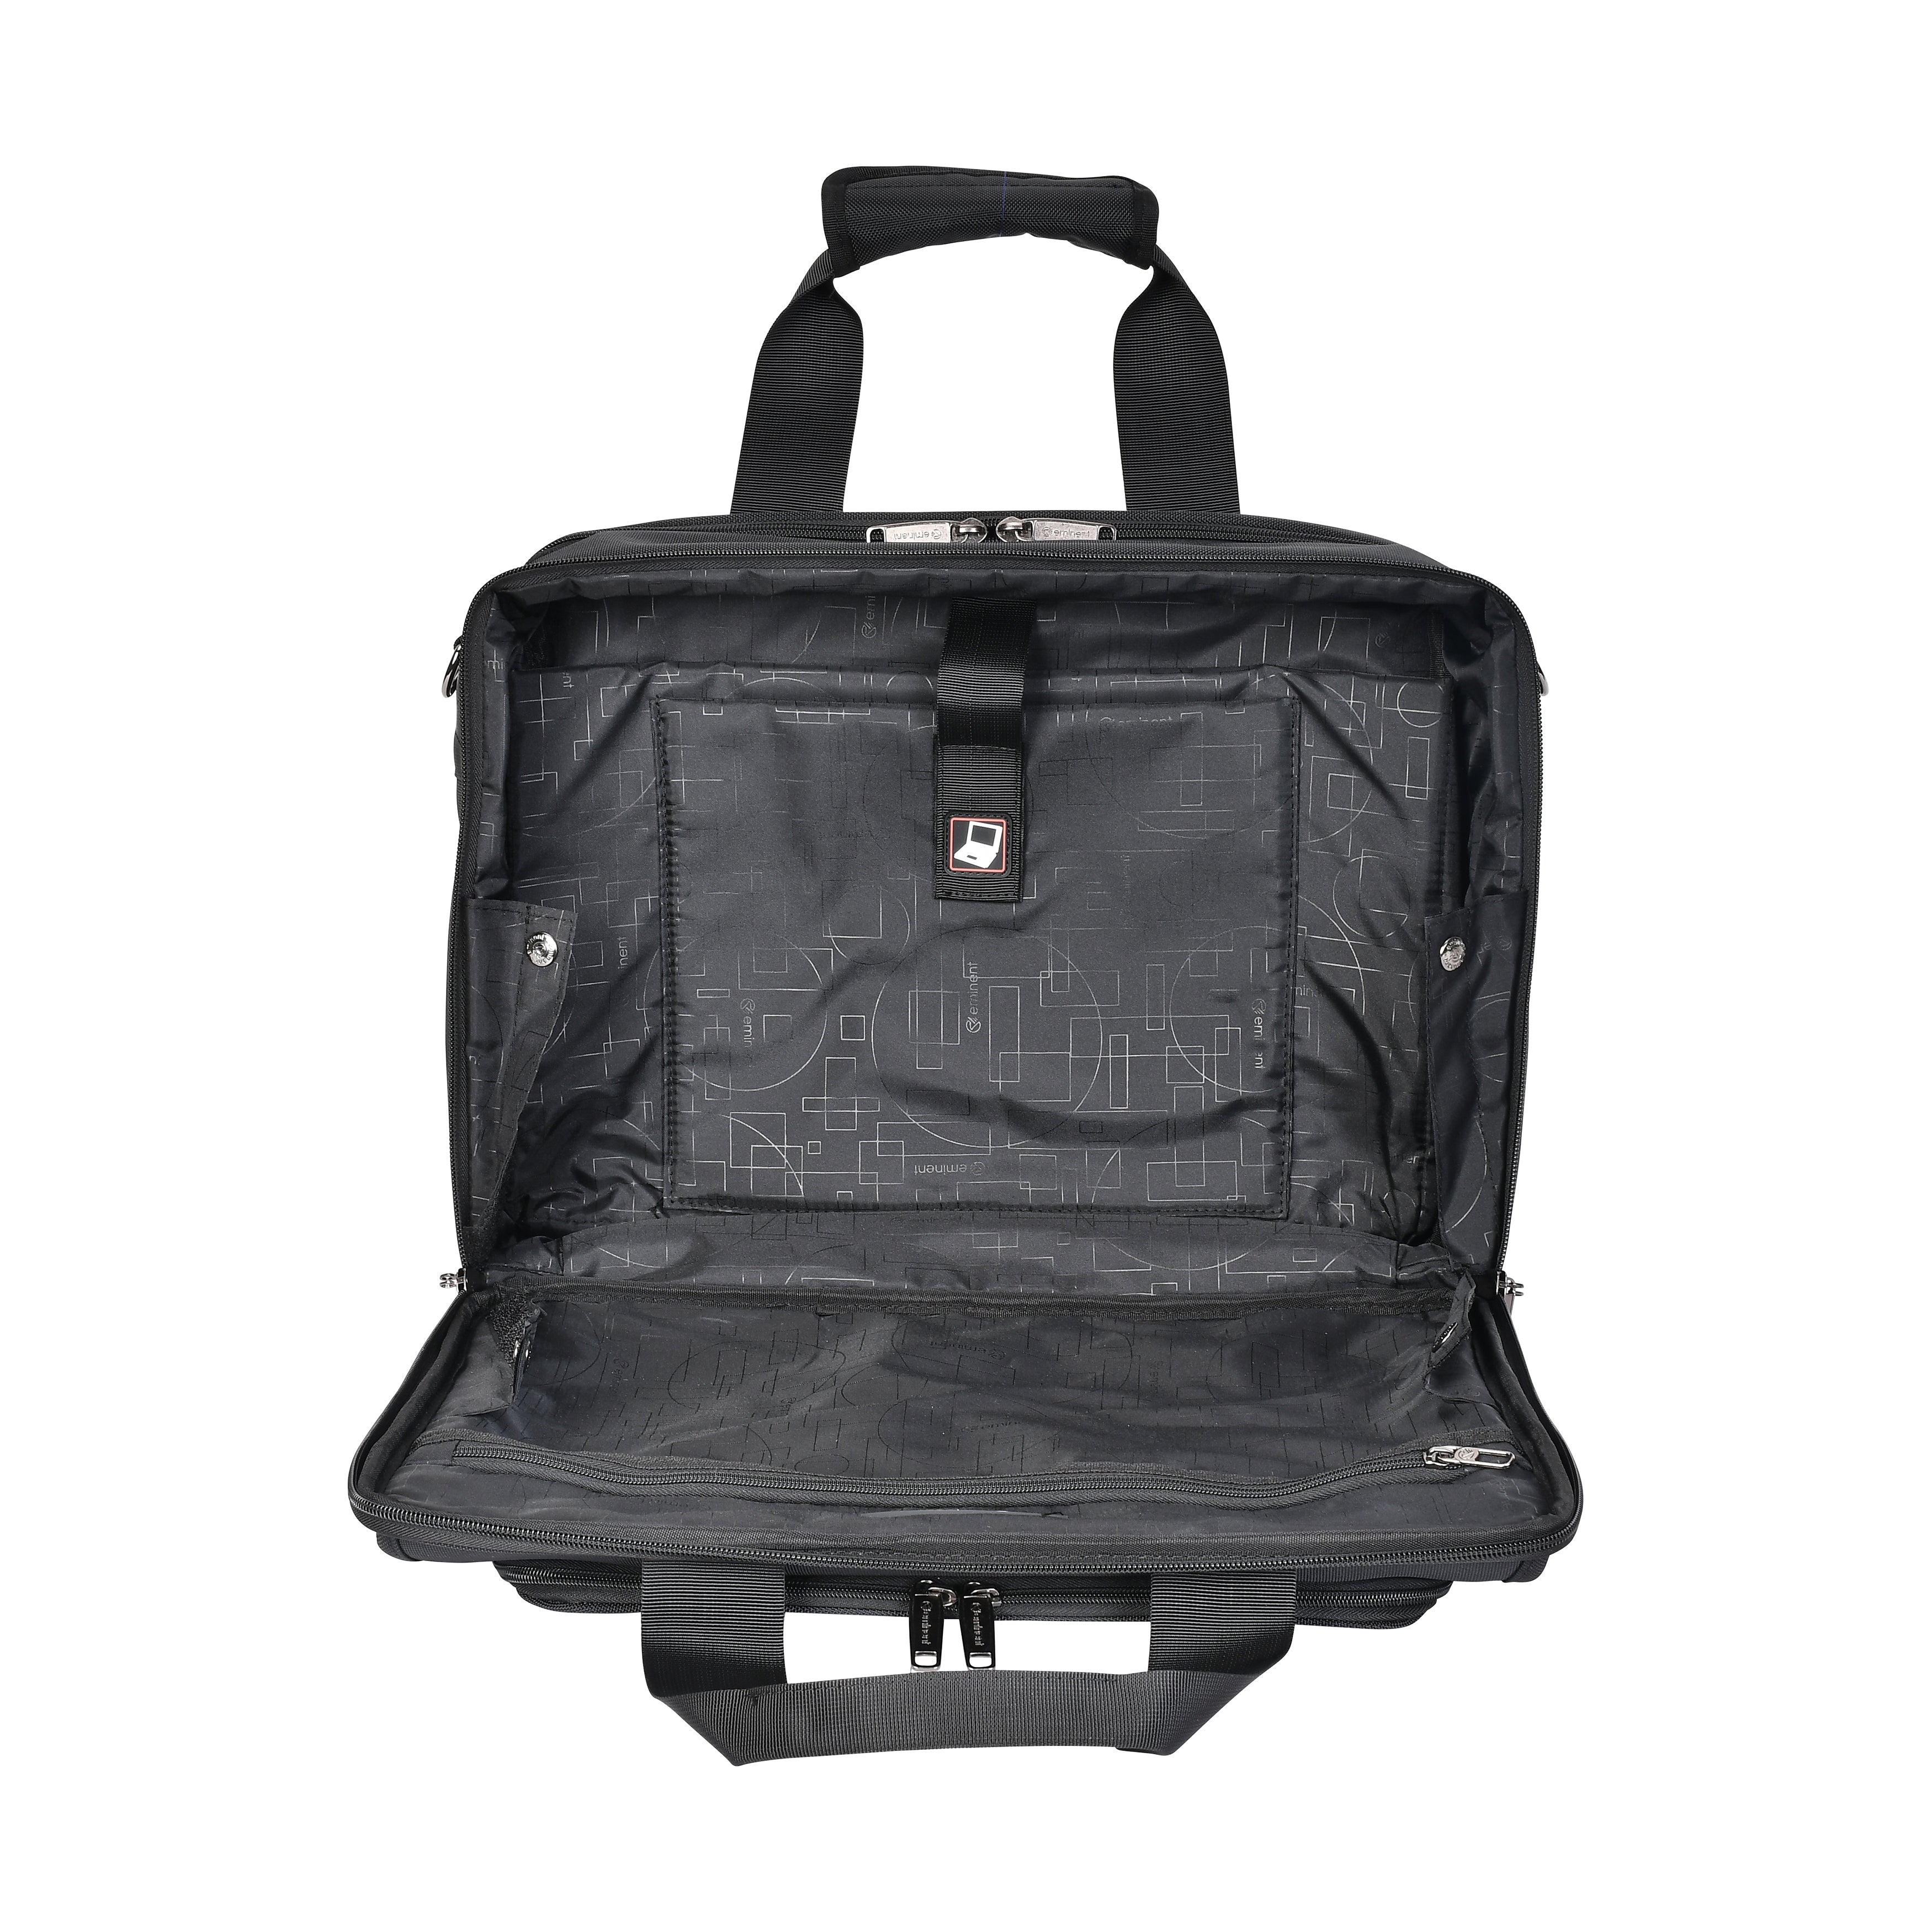 Eminent Premium Polyester Laptop Bag 17 Inch Light Weight 180° Opening Business Laptop Case for Men Women on Travel Business, V612-17